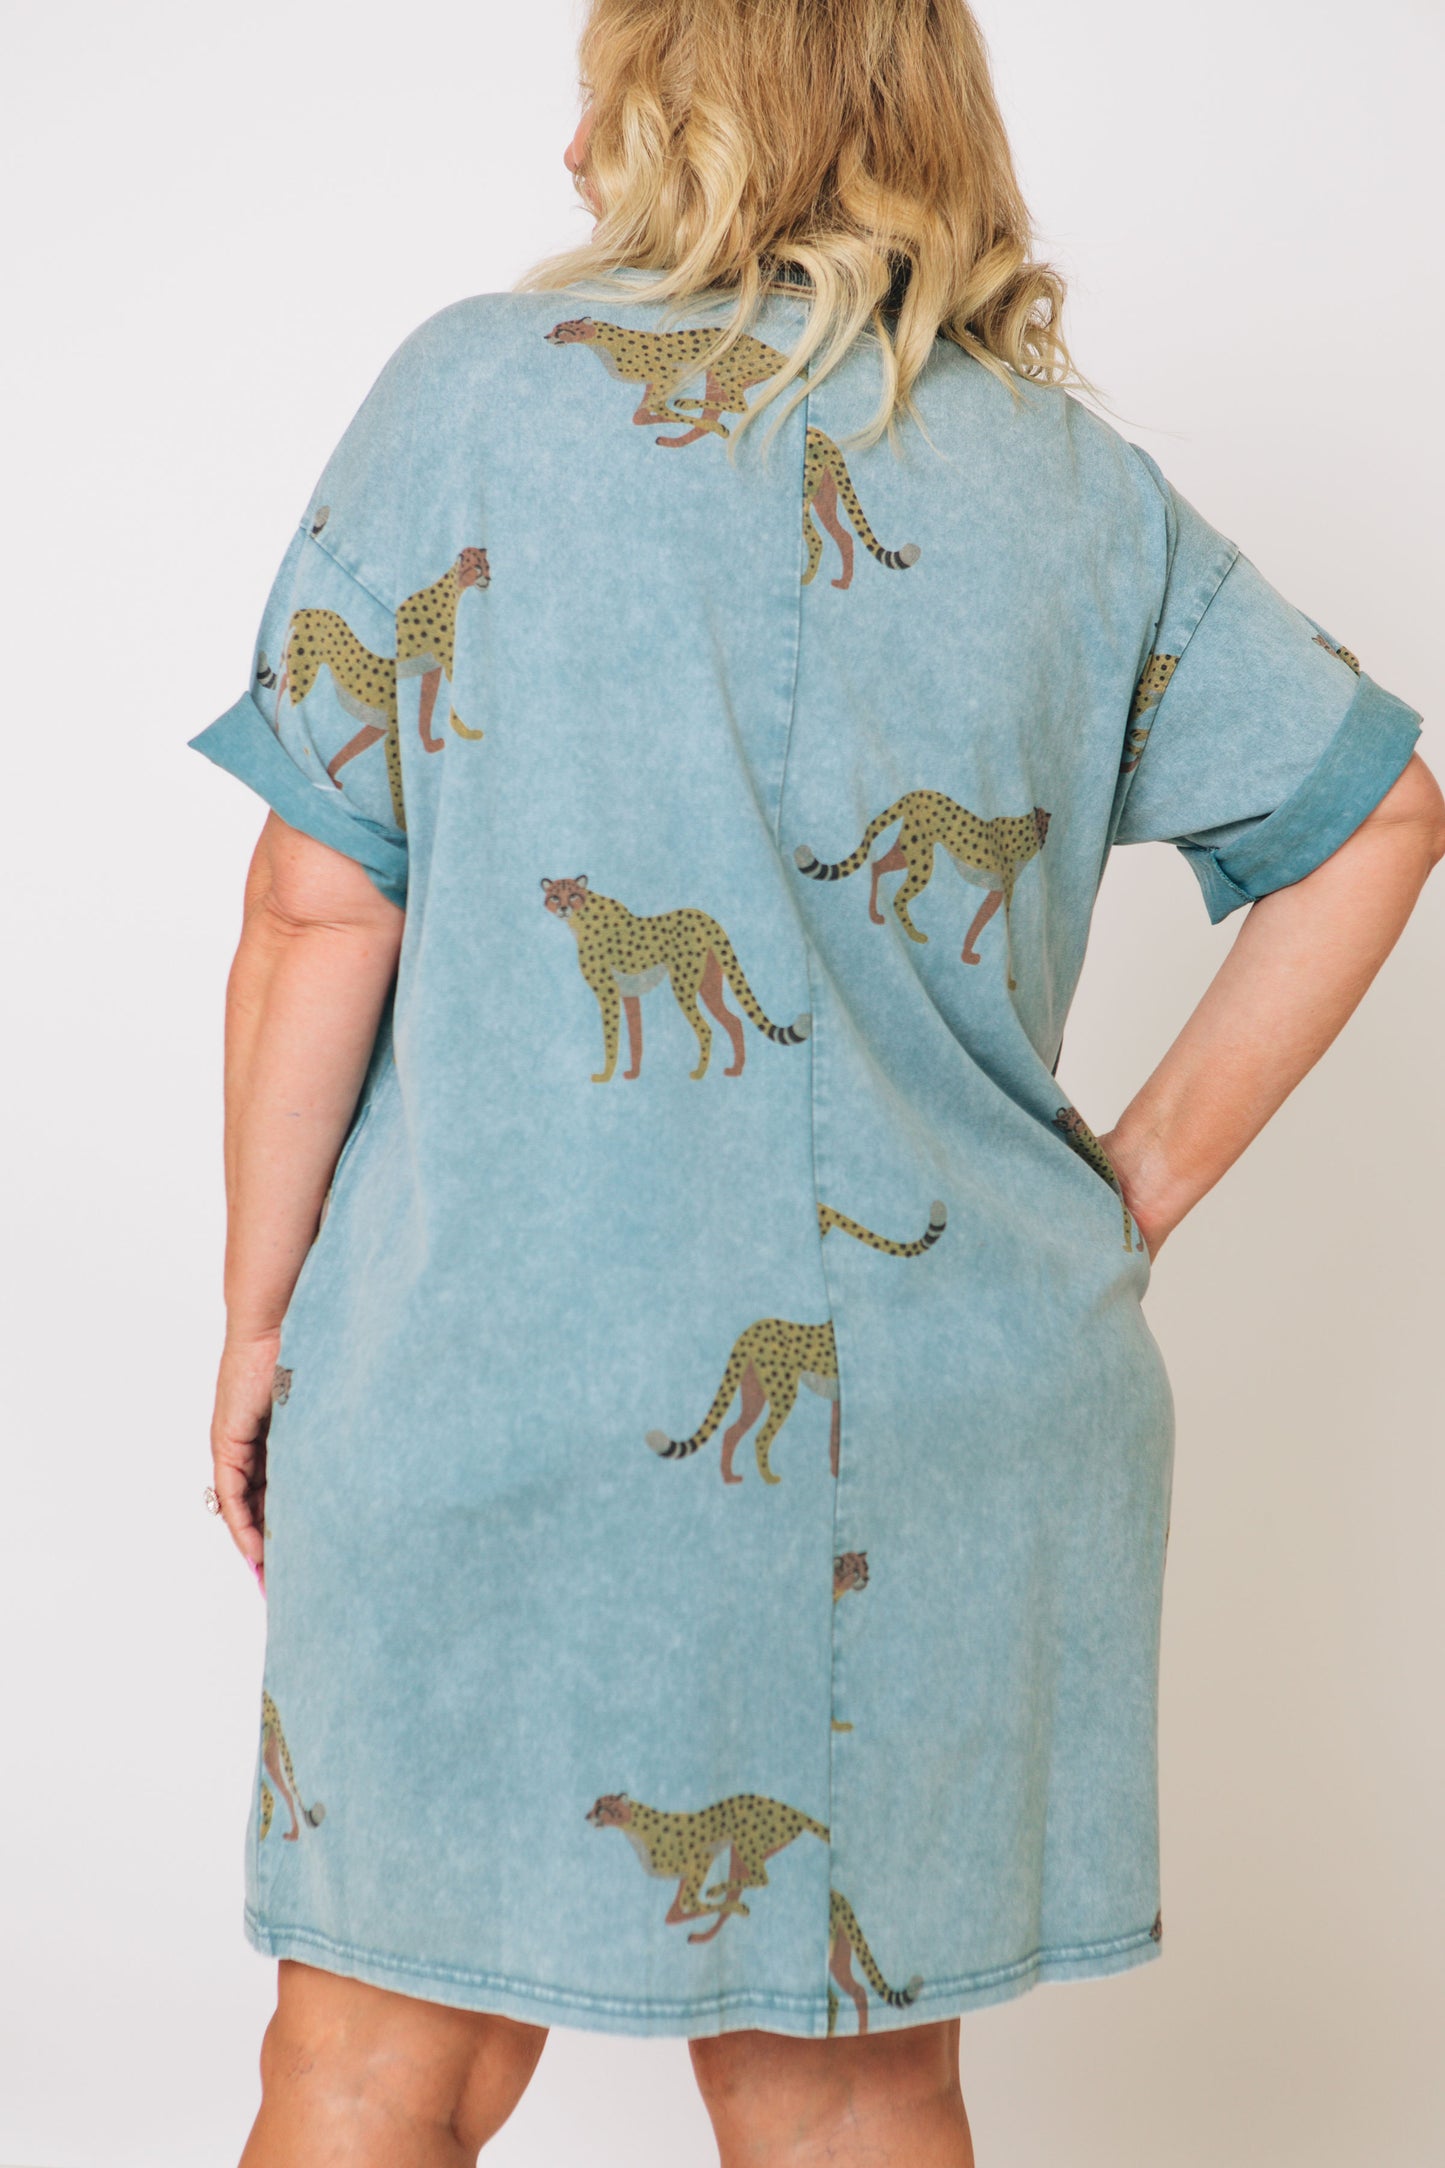 Easel - Mineral Washed Cheetah Print T-Shirt Dress (S-3XL)